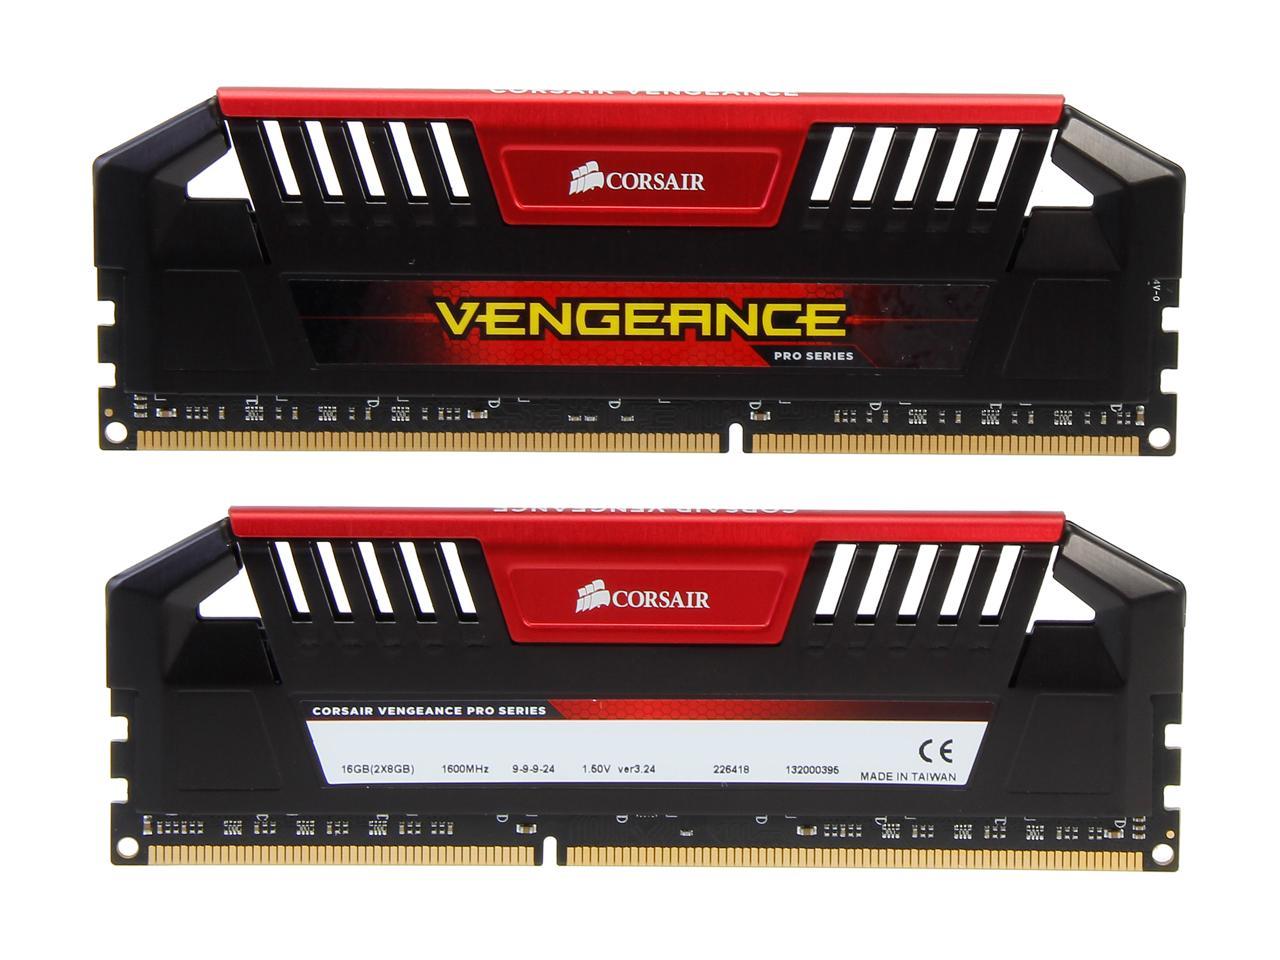 CORSAIR Vengeance Pro 16GB (2 x 8GB) DDR3 1600 (PC3 12800) Desktop Memory  Model CMY16GX3M2A1600C9R - Newegg.com